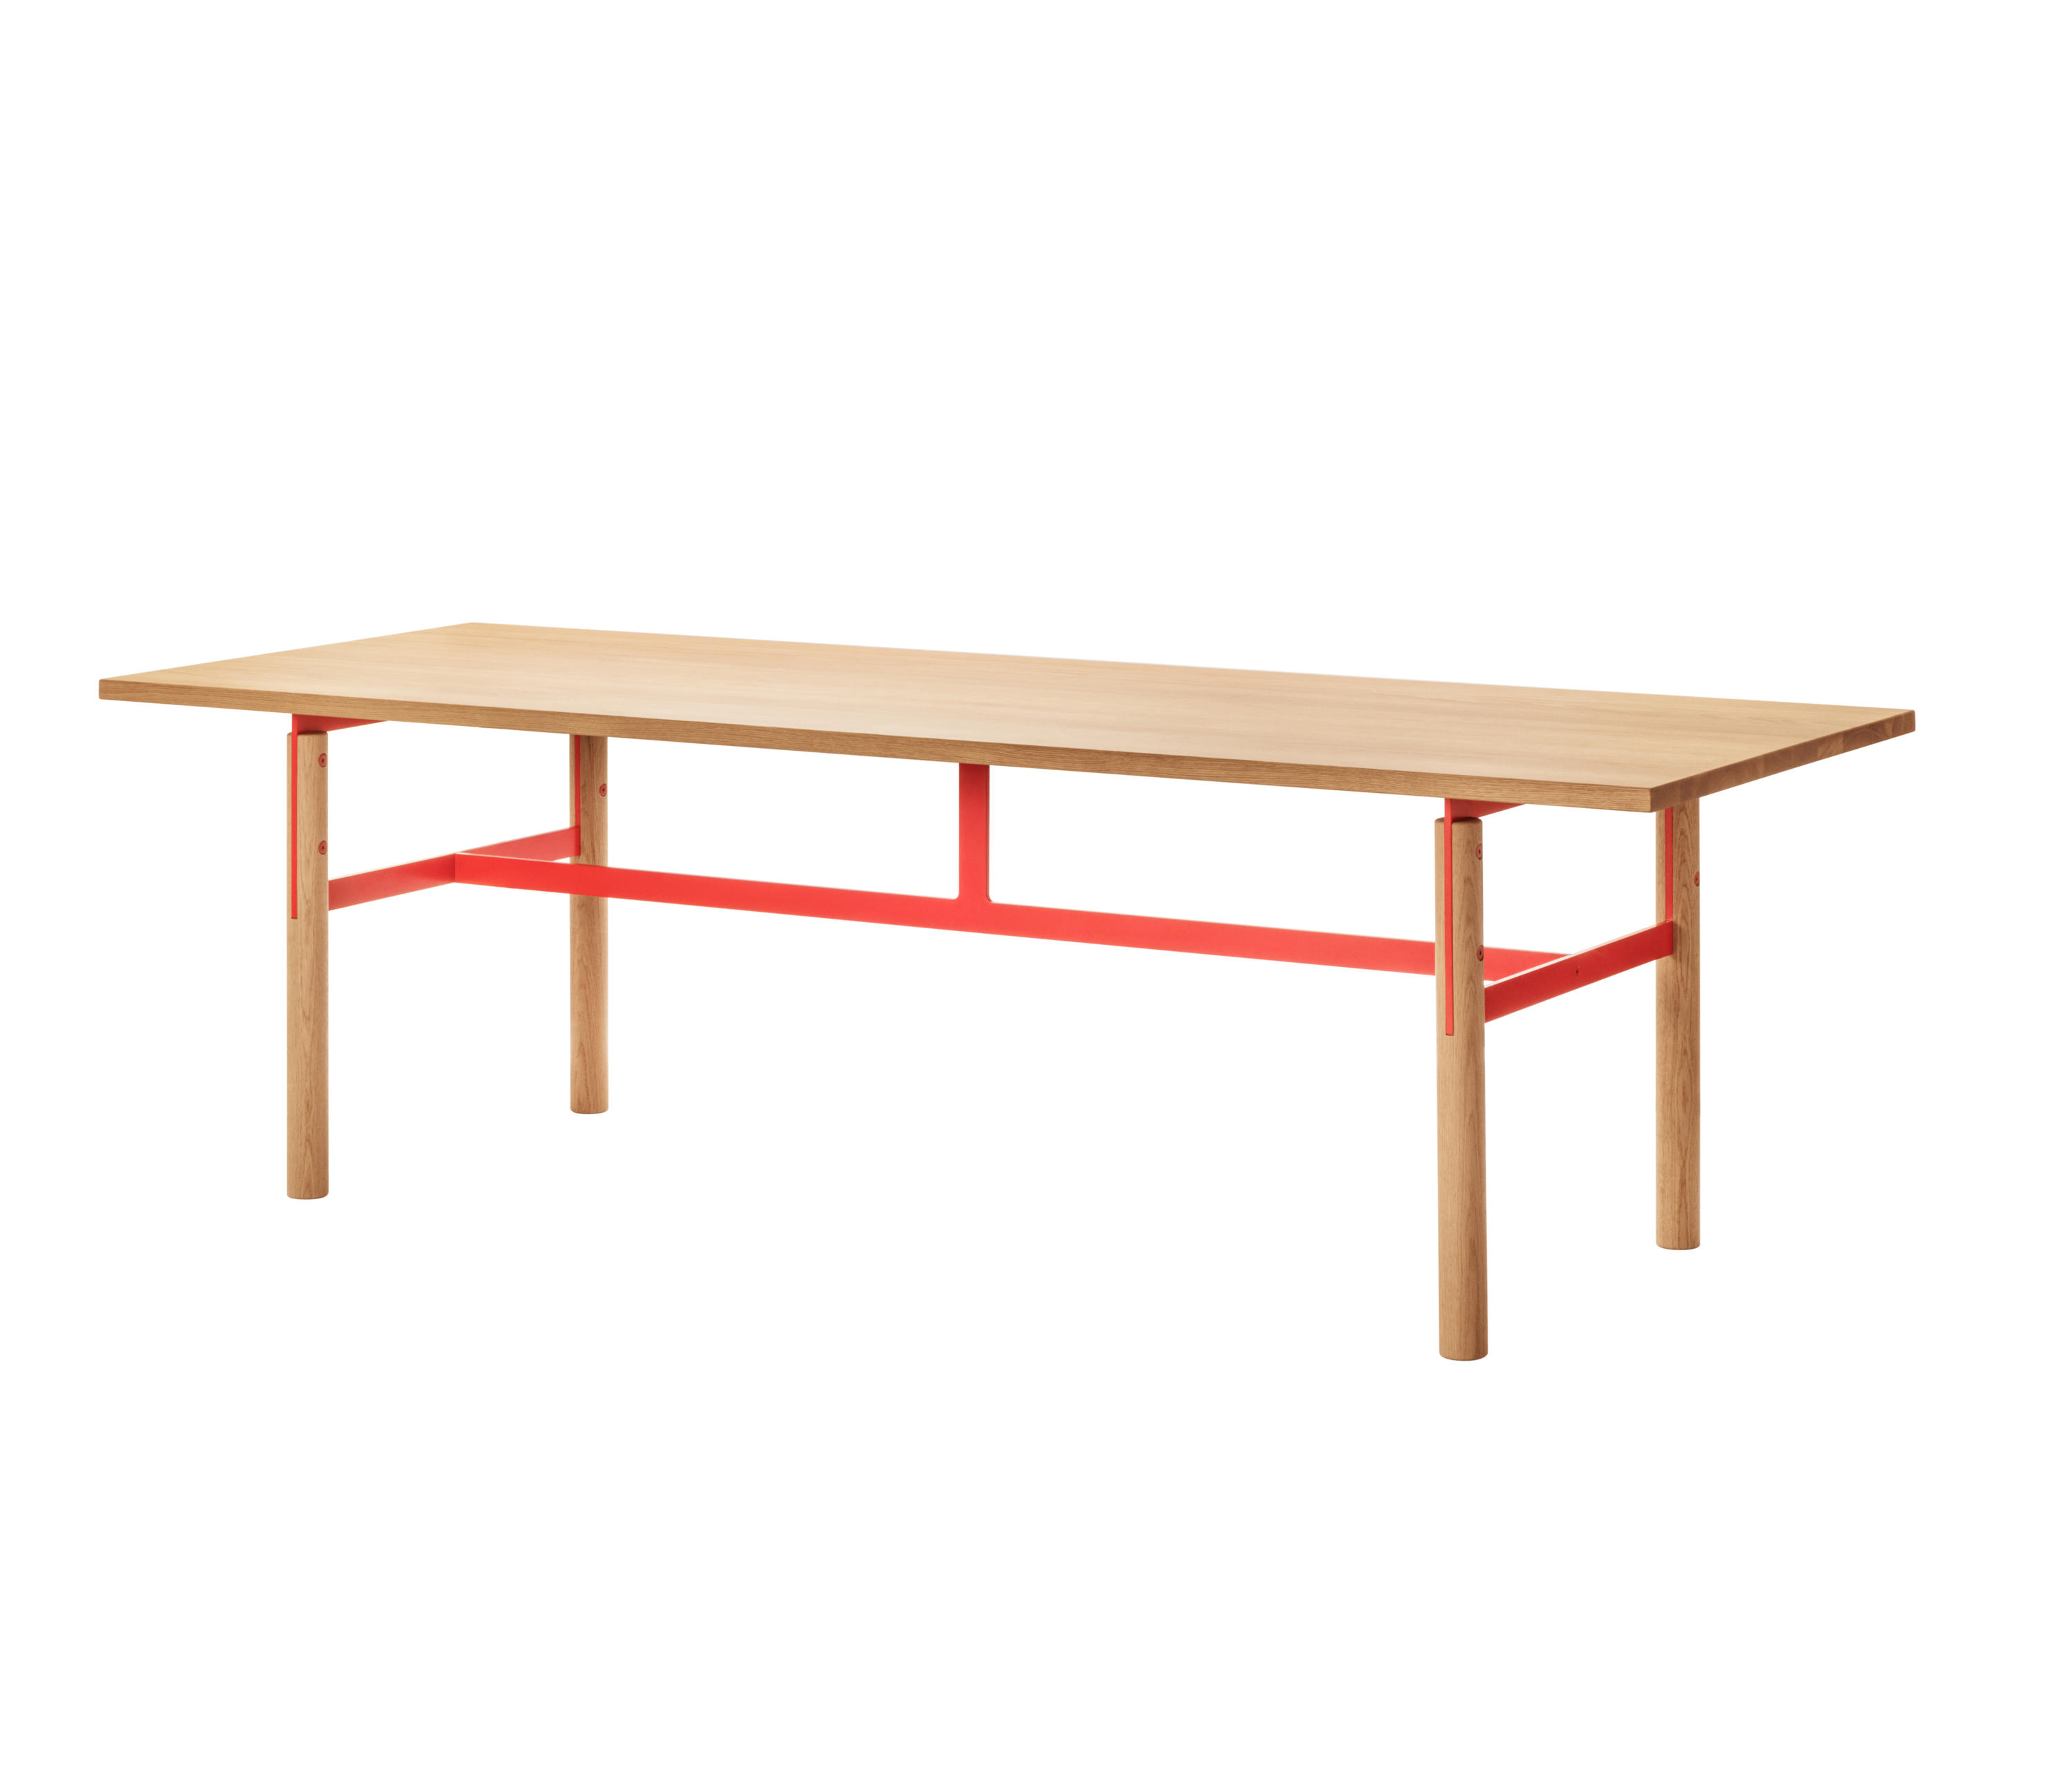 BEAM DINING TABLE - Dining tables from møbel copenhagen | Architonic